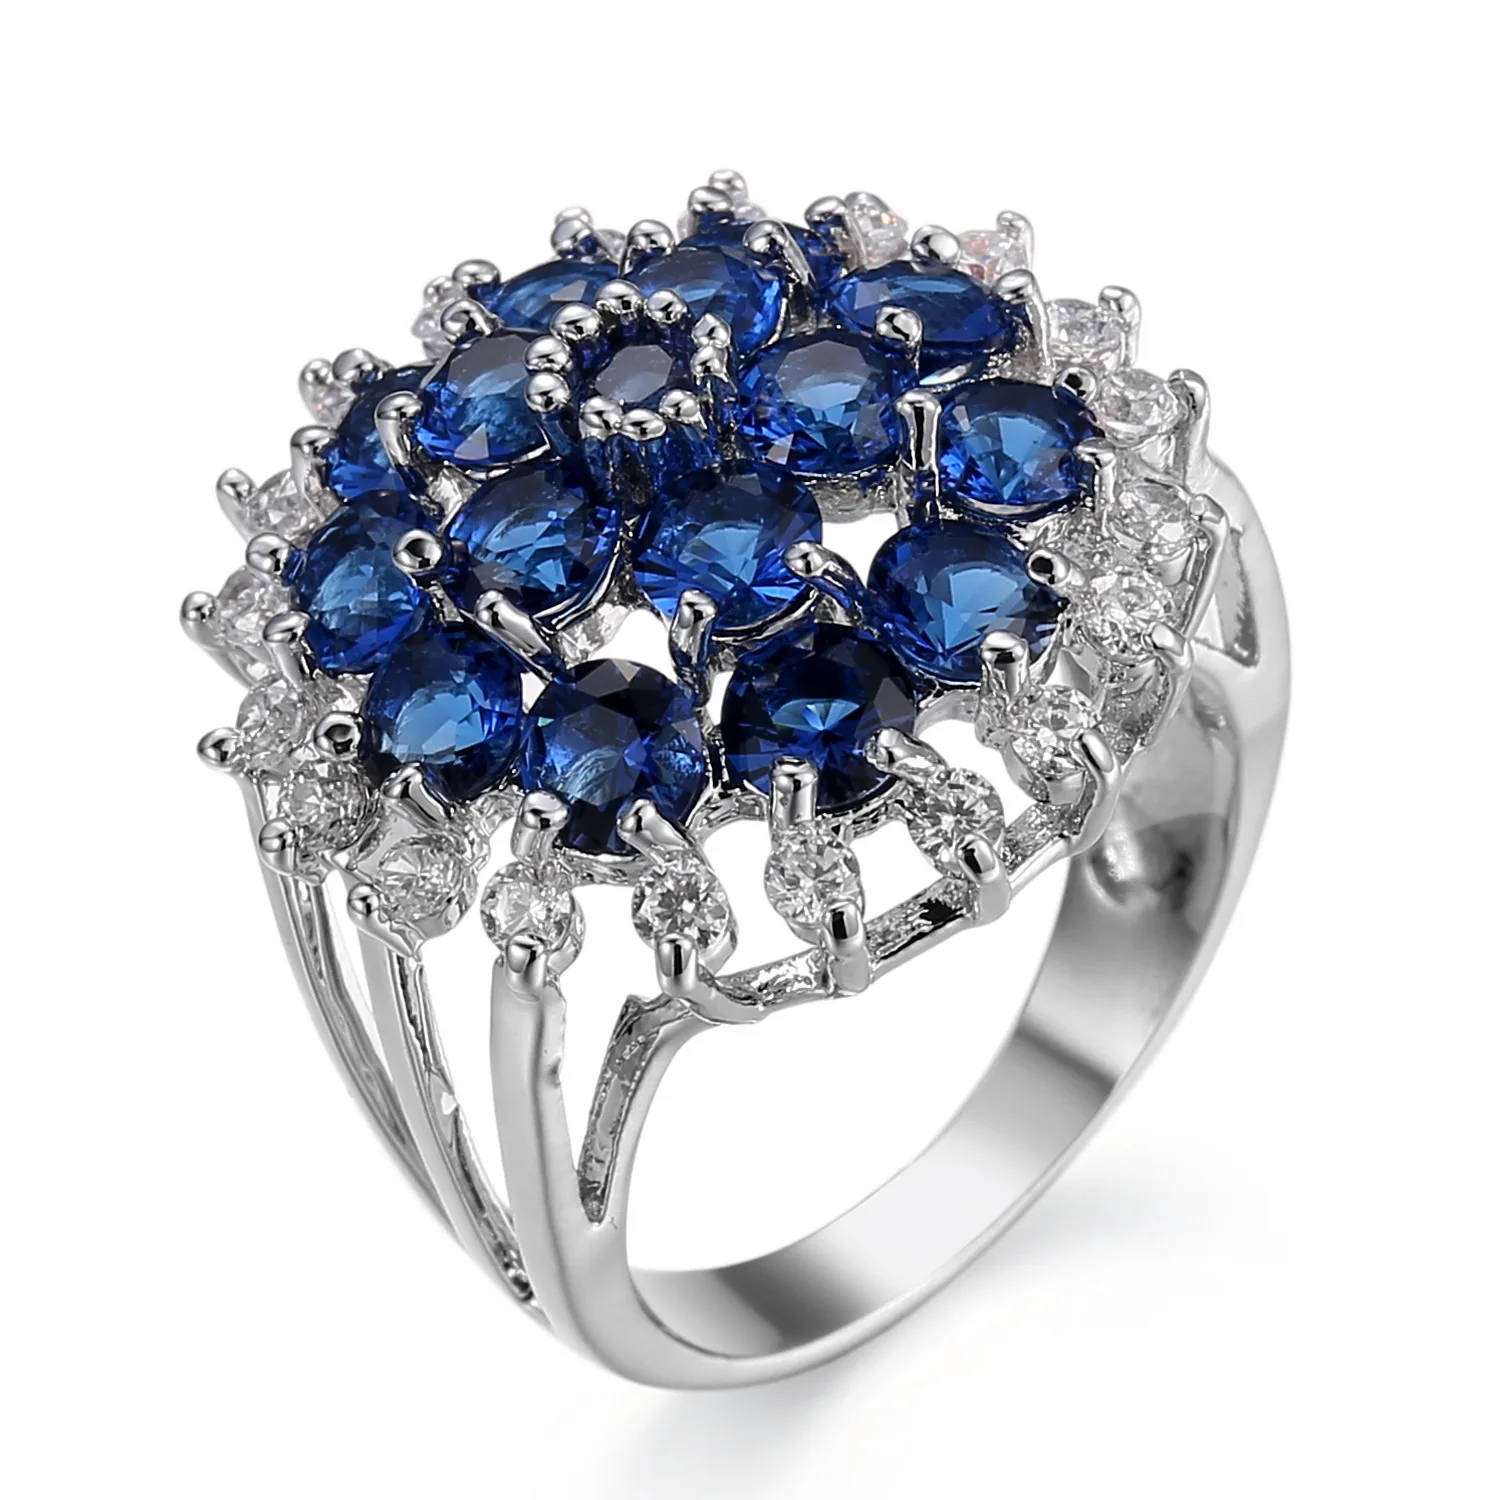 

Anillo de bodas anillo led nail jewels bijoux inoxydable verpackung schmuck Purple zircon big flower lady zircon ring, Picture shows